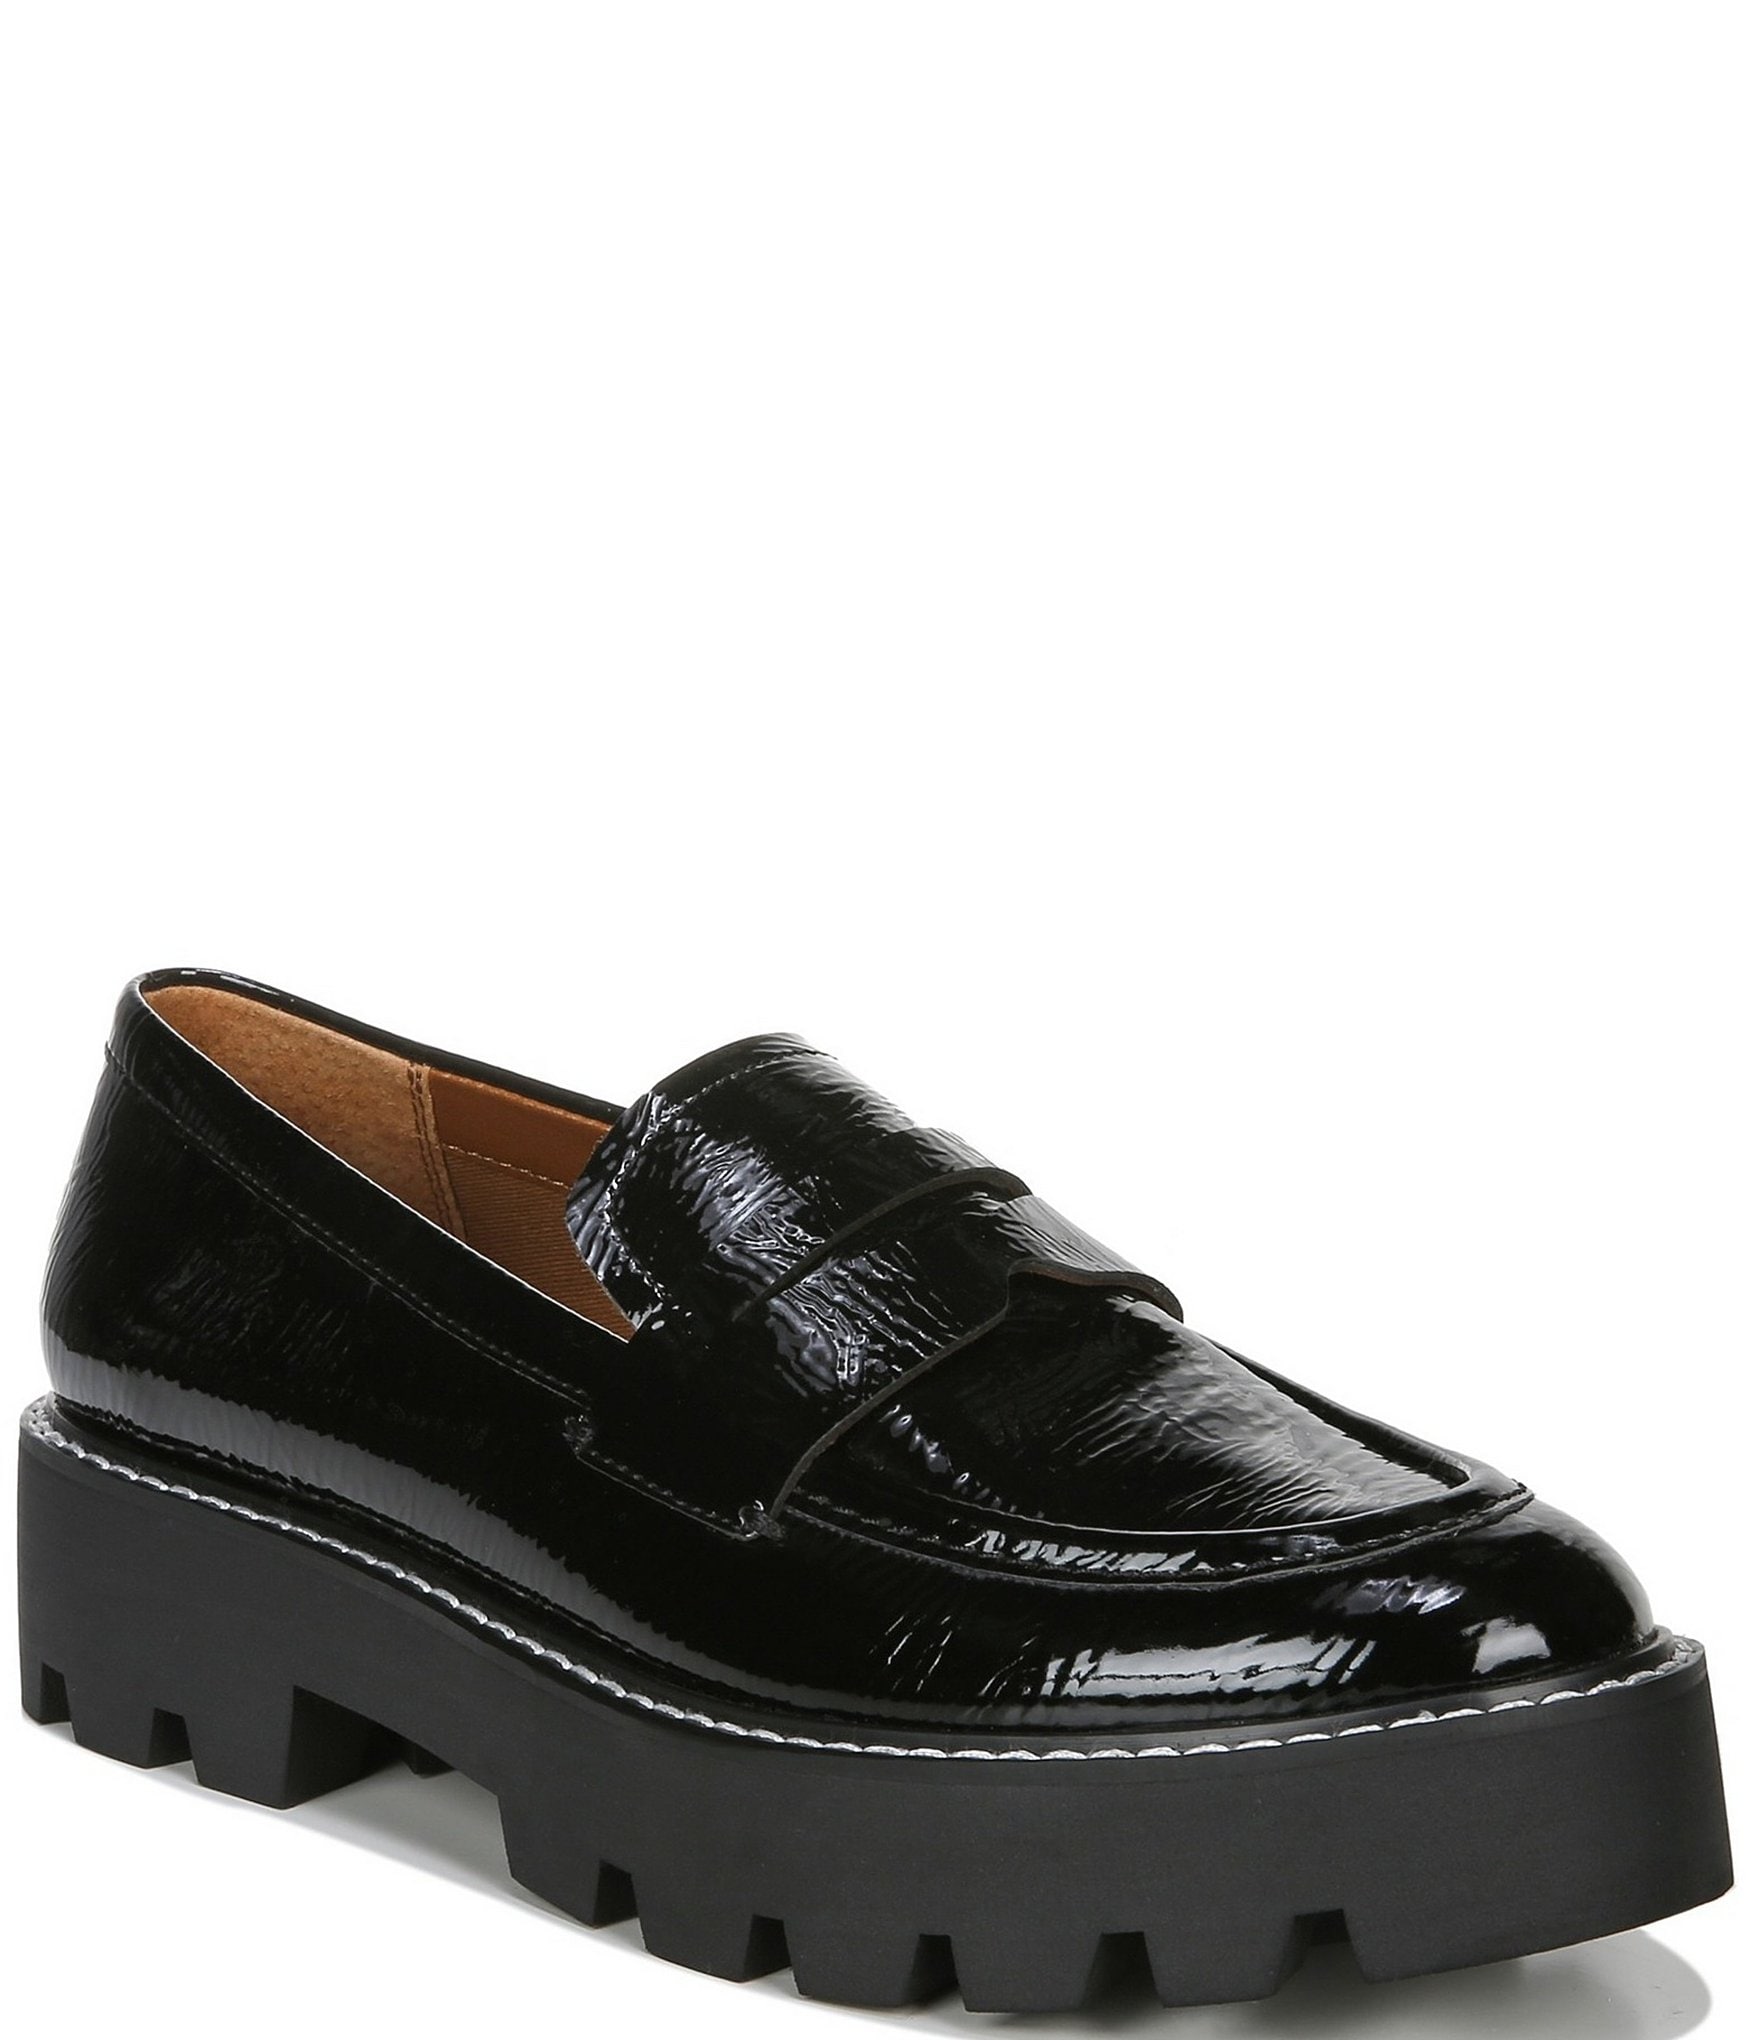 Buy > franco sarto heeled loafers > in stock